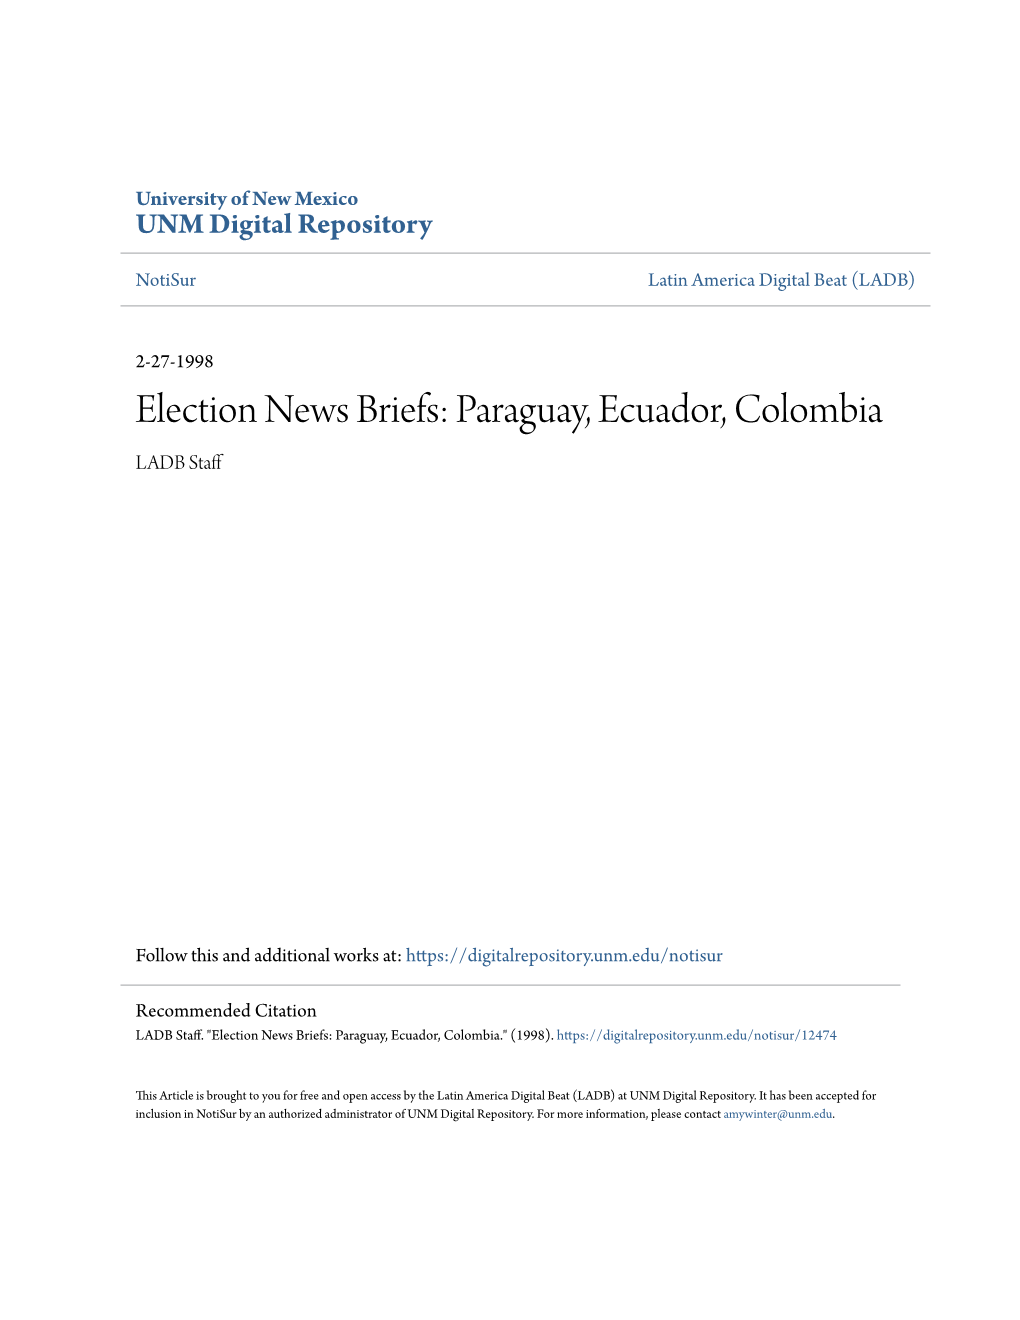 Election News Briefs: Paraguay, Ecuador, Colombia LADB Staff